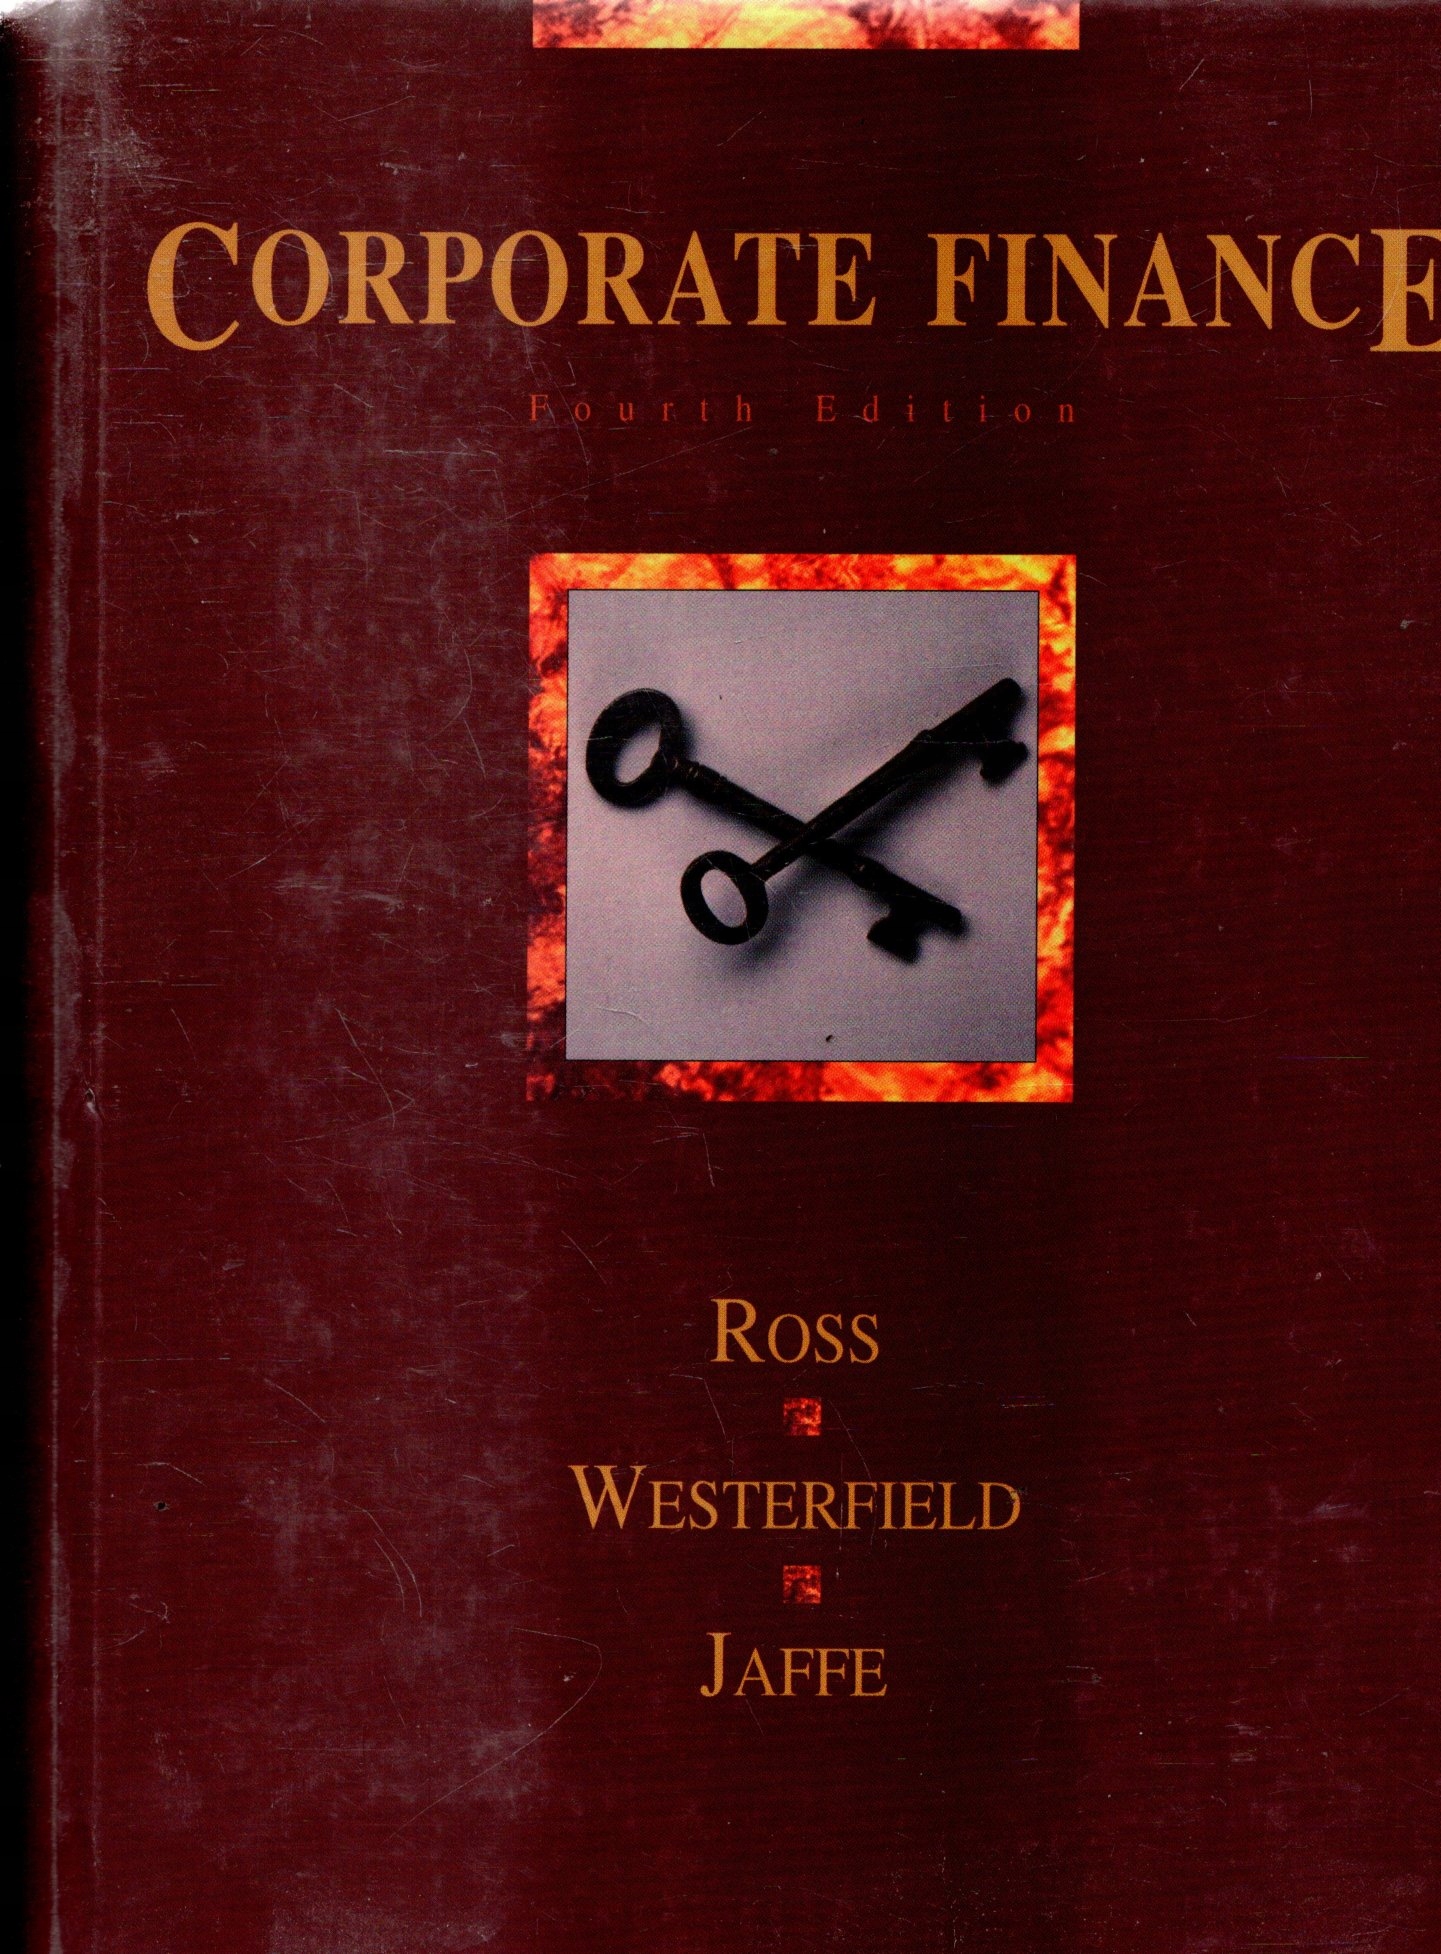 ISE Corporate Finance TWARDA okładka